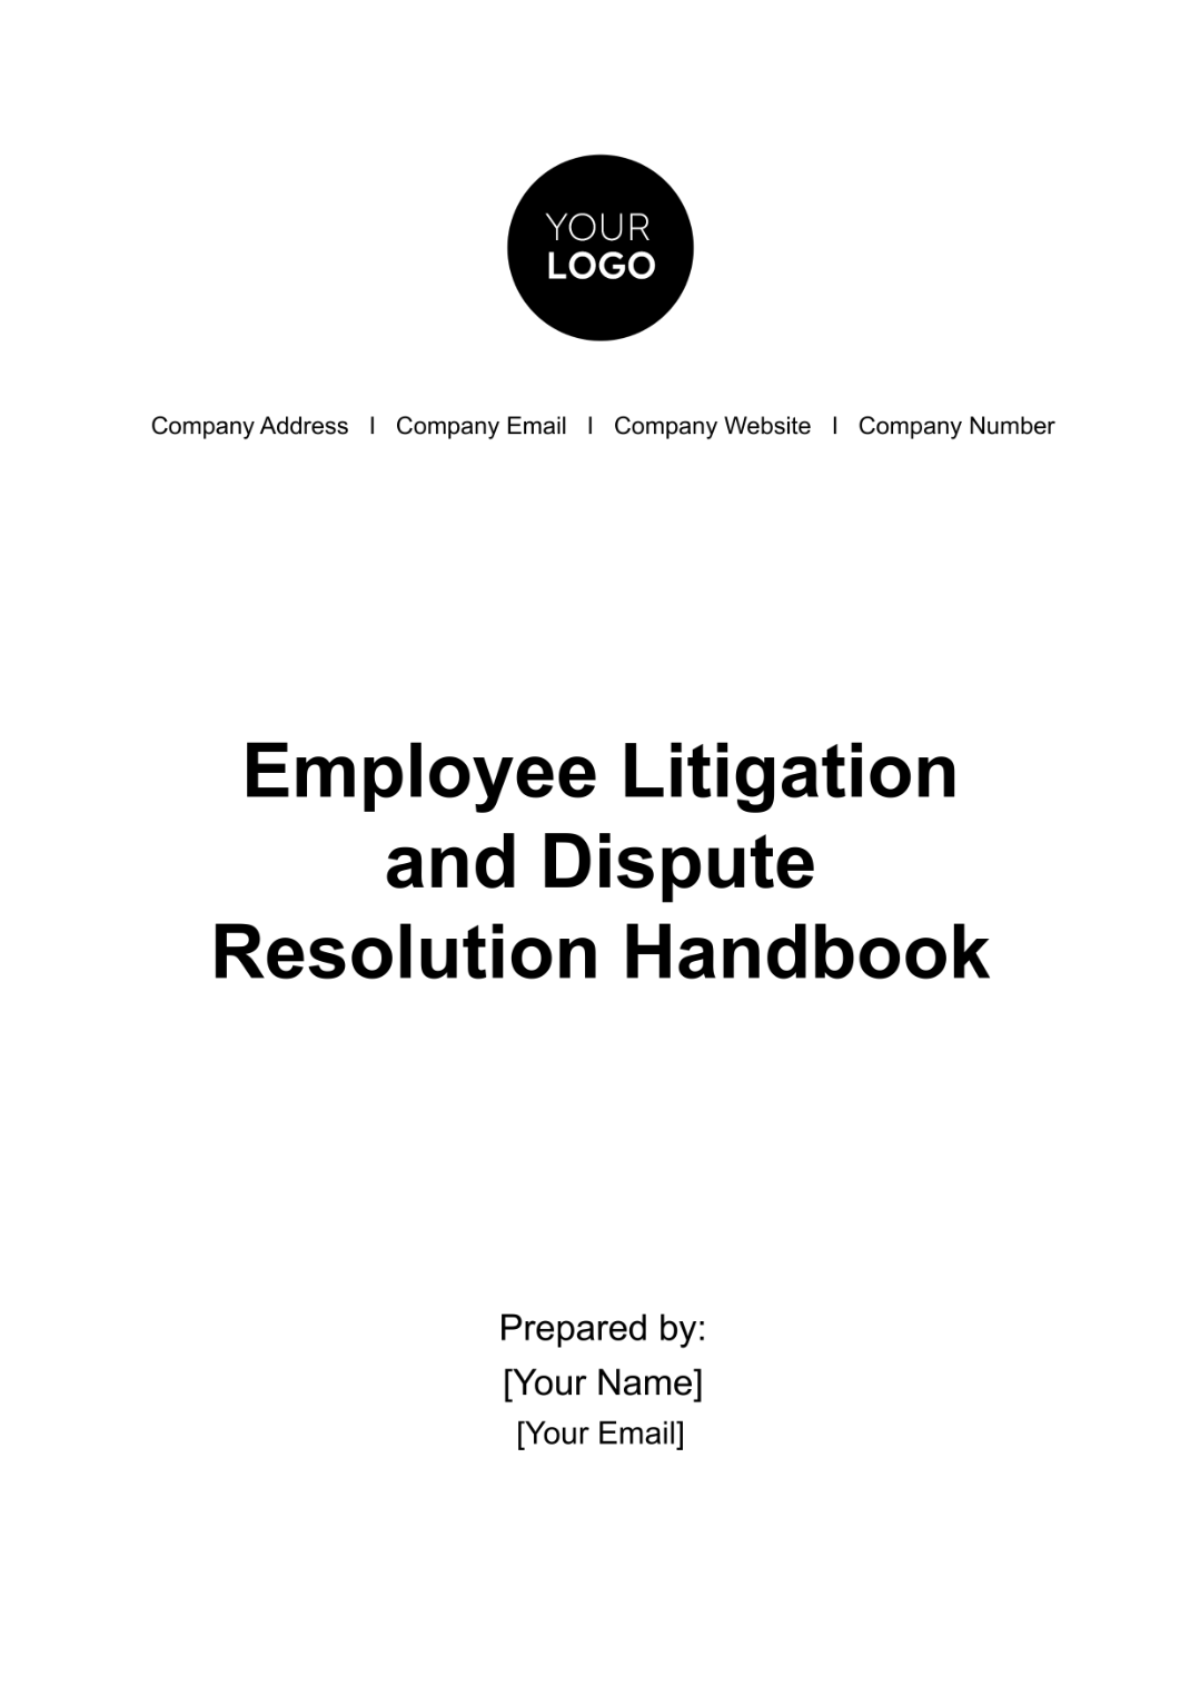 Free Employee Litigation and Dispute Resolution Handbook HR Template